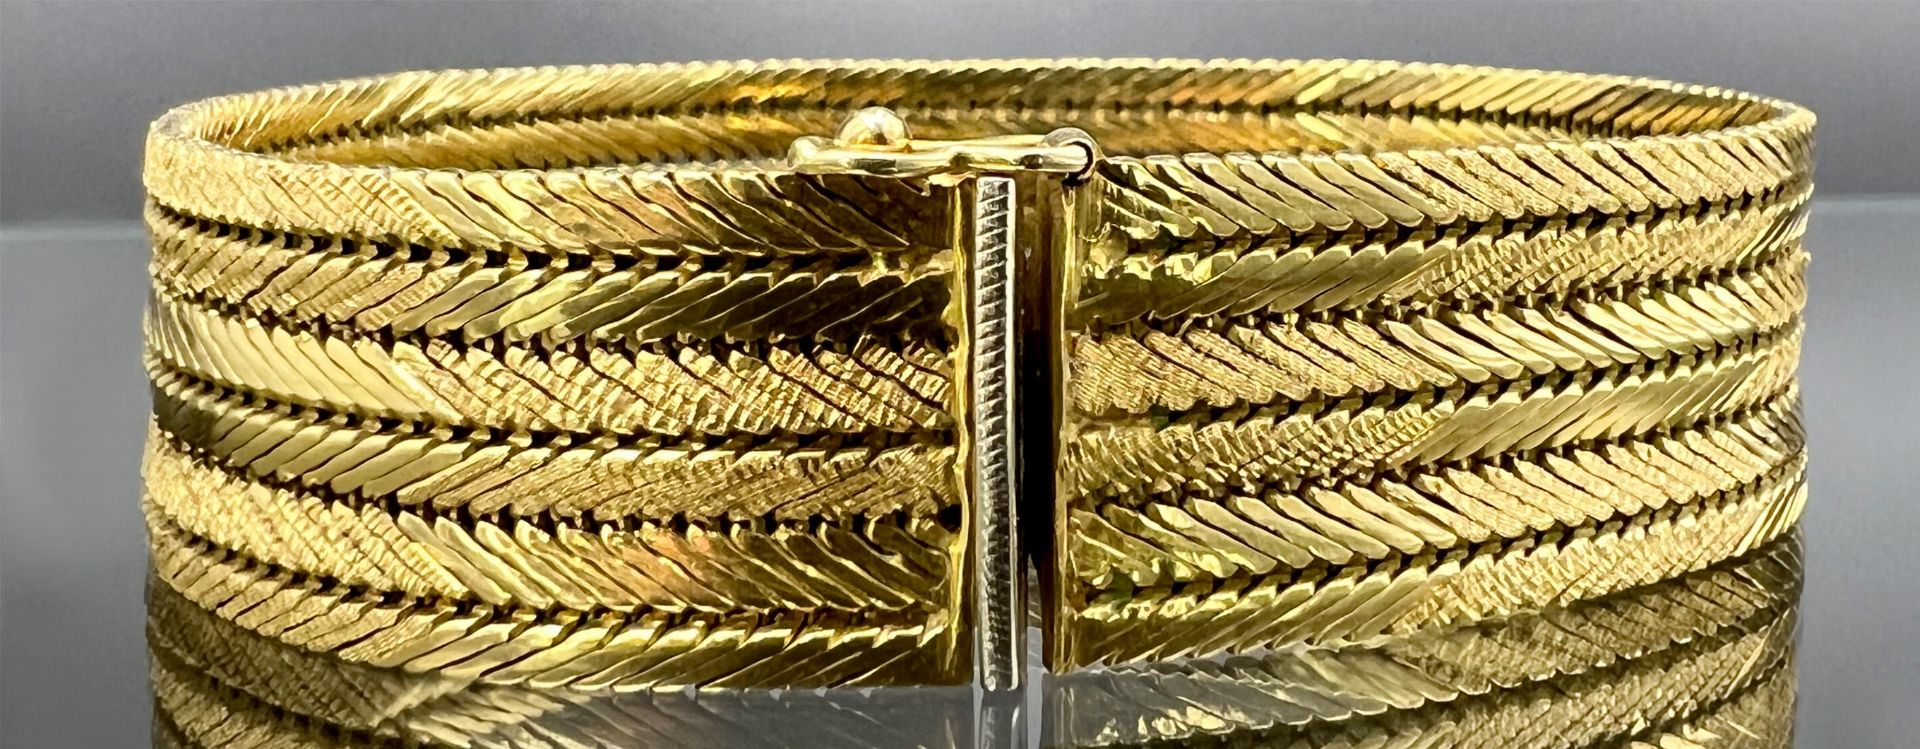 Bracelet 750 yellow gold. - Image 3 of 5